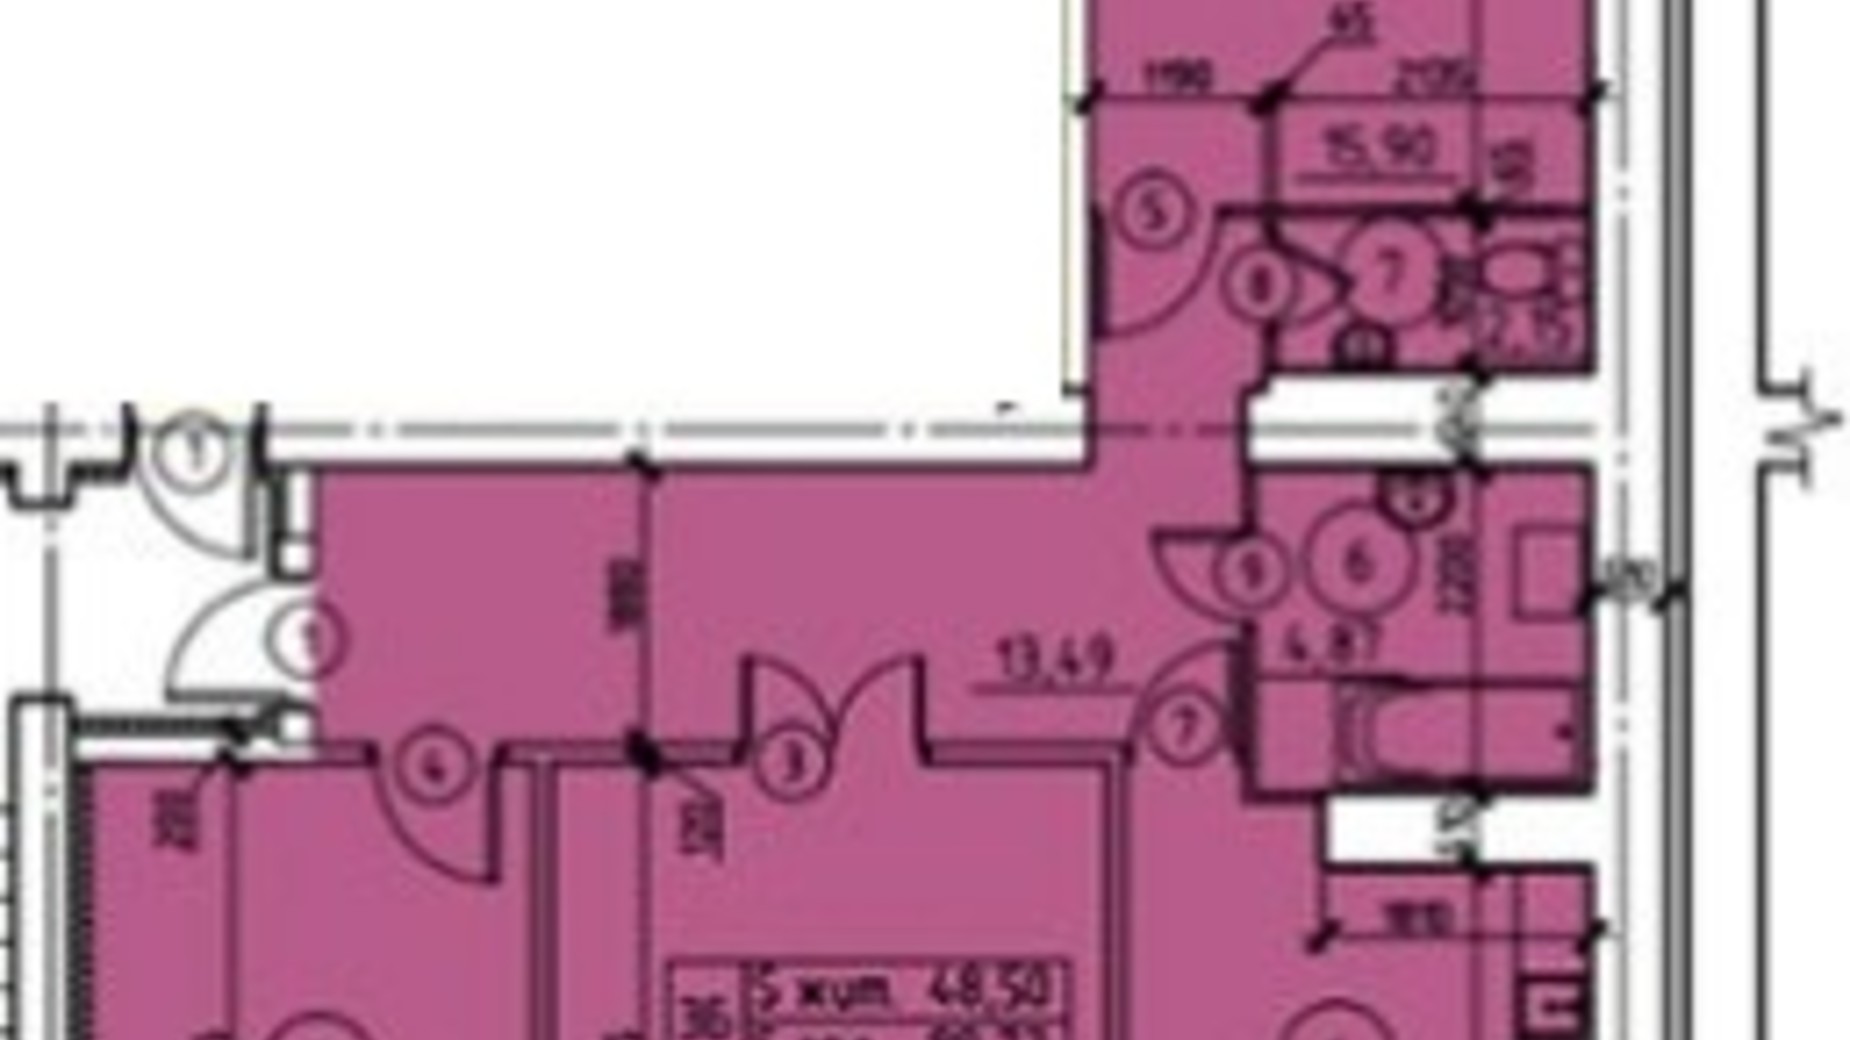 Планування 3-кімнатної квартири в ЖК пр-т М. Лушпи, корпус 22/1 77.74 м², фото 245048